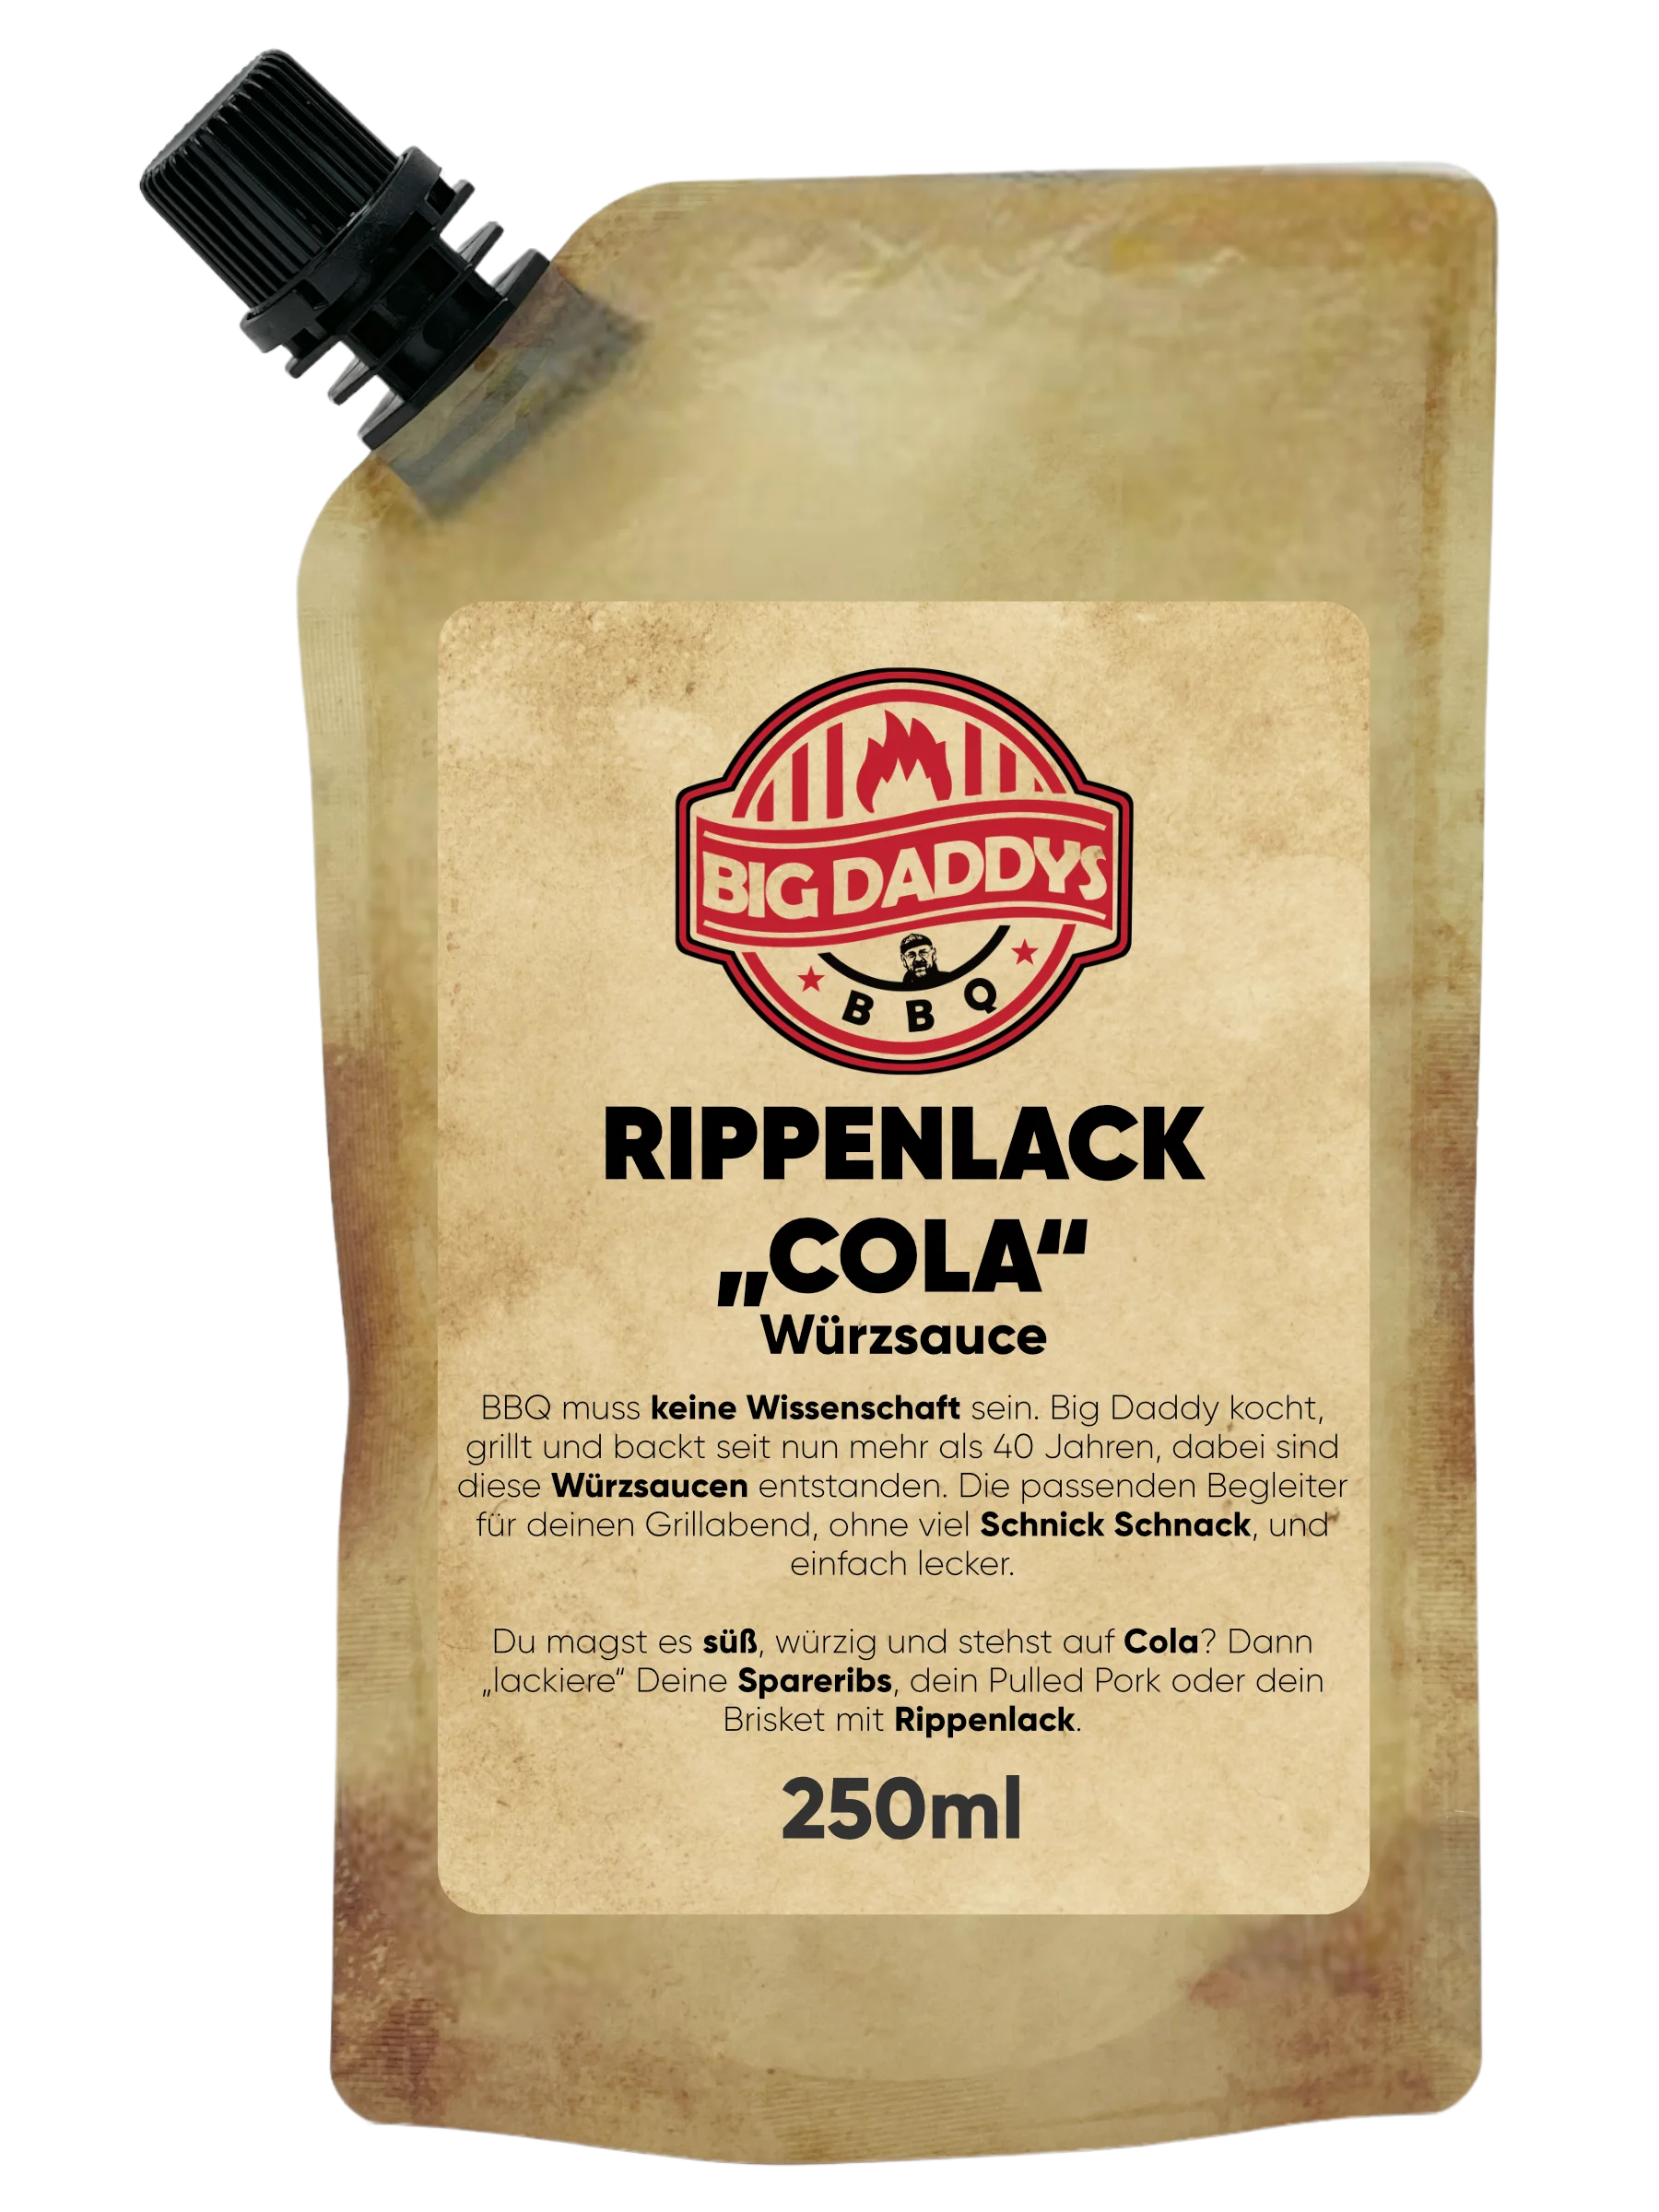 Big Daddy's, Rippenlack Cola, 250ml Beutel